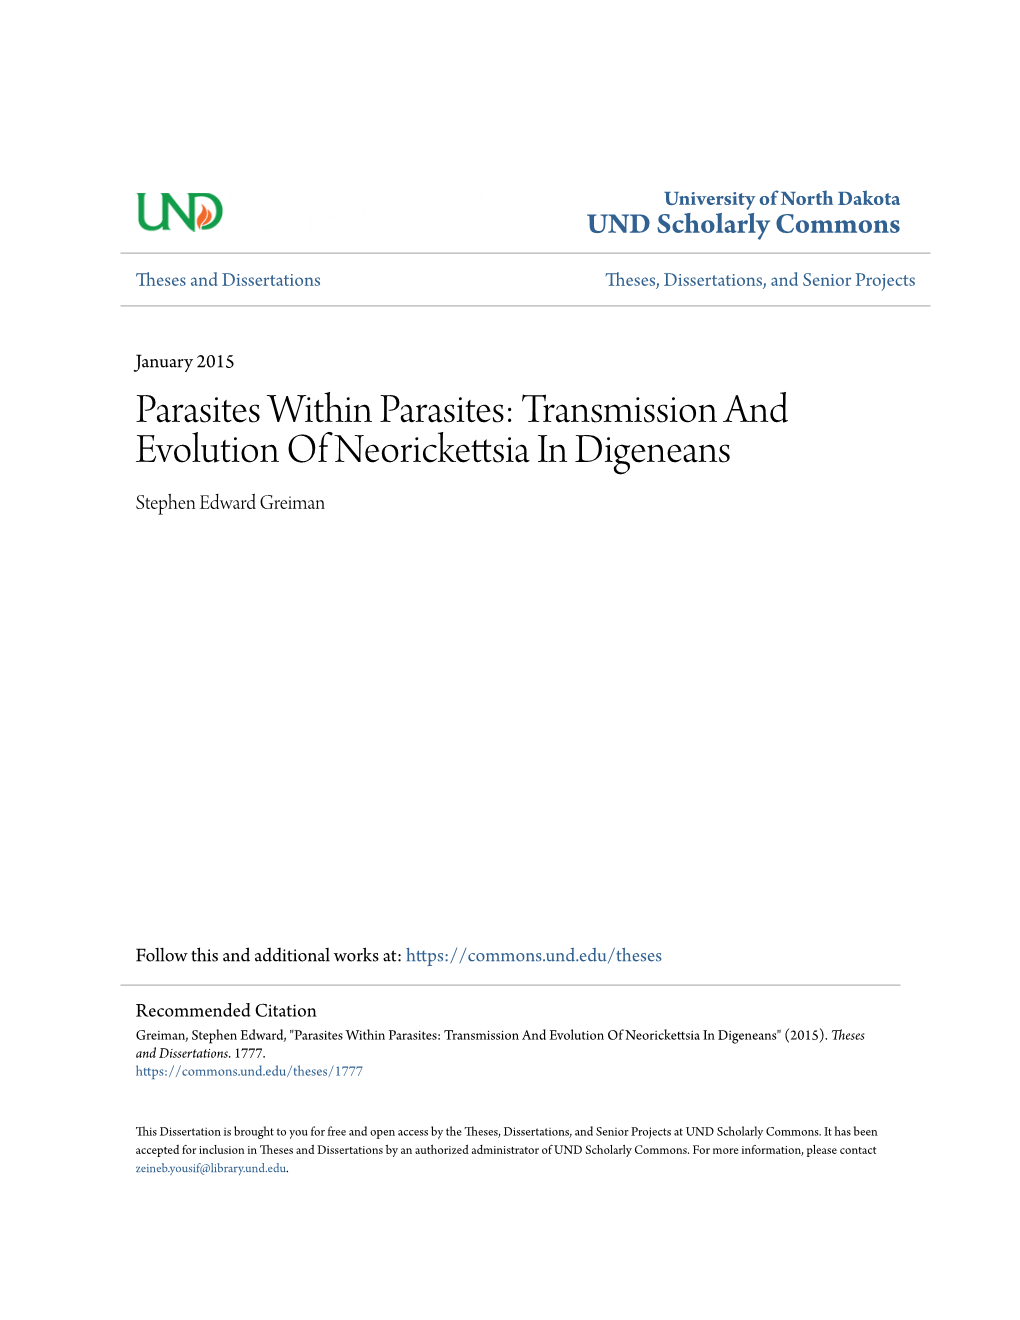 Parasites Within Parasites: Transmission and Evolution of Neorickettsia in Digeneans Stephen Edward Greiman